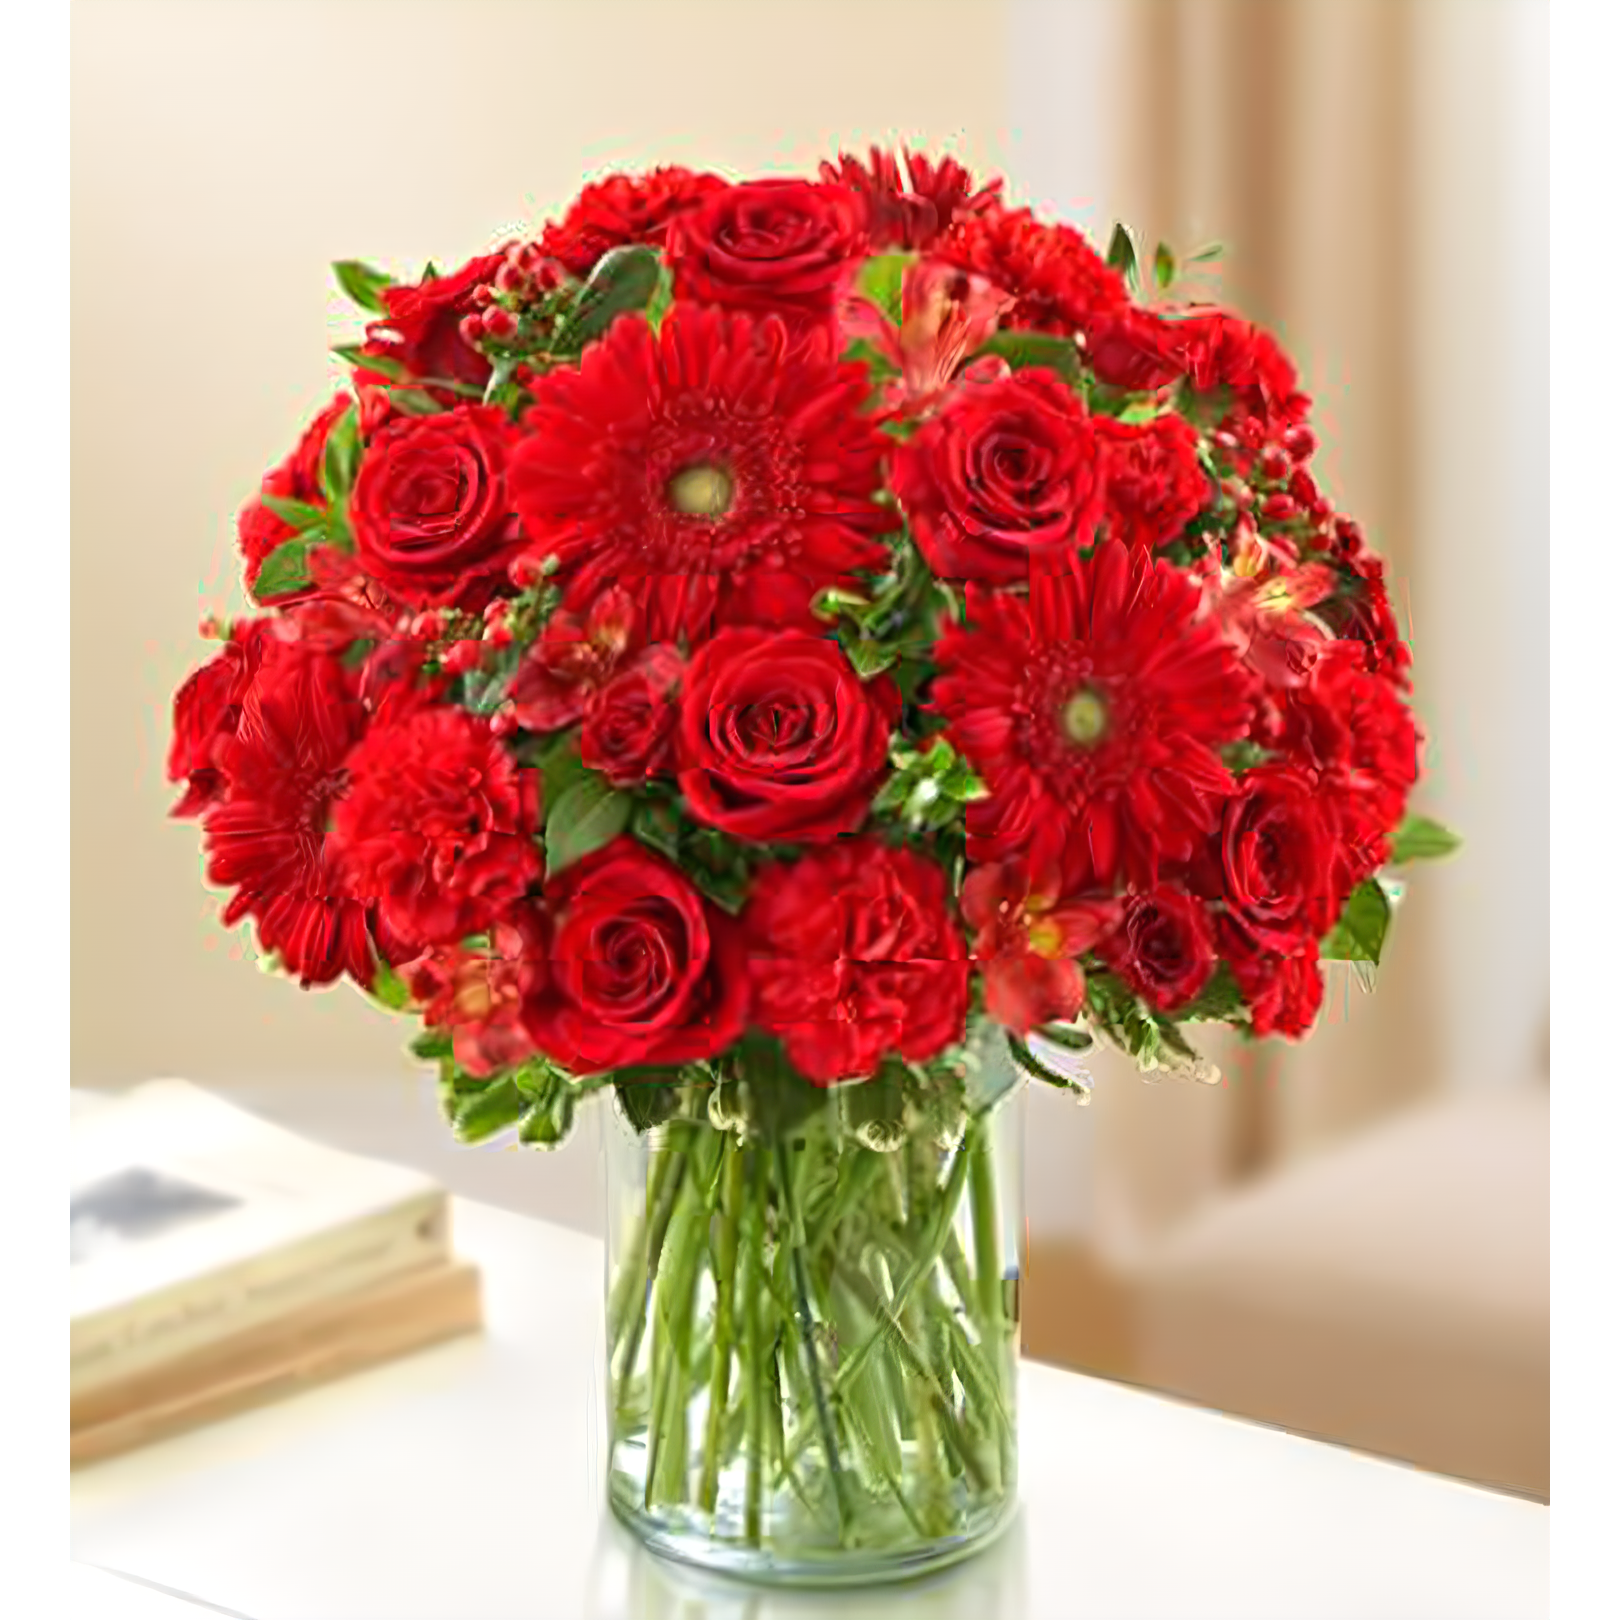 Sincerest Sorrow - All Red - Funeral > Vase Arrangements